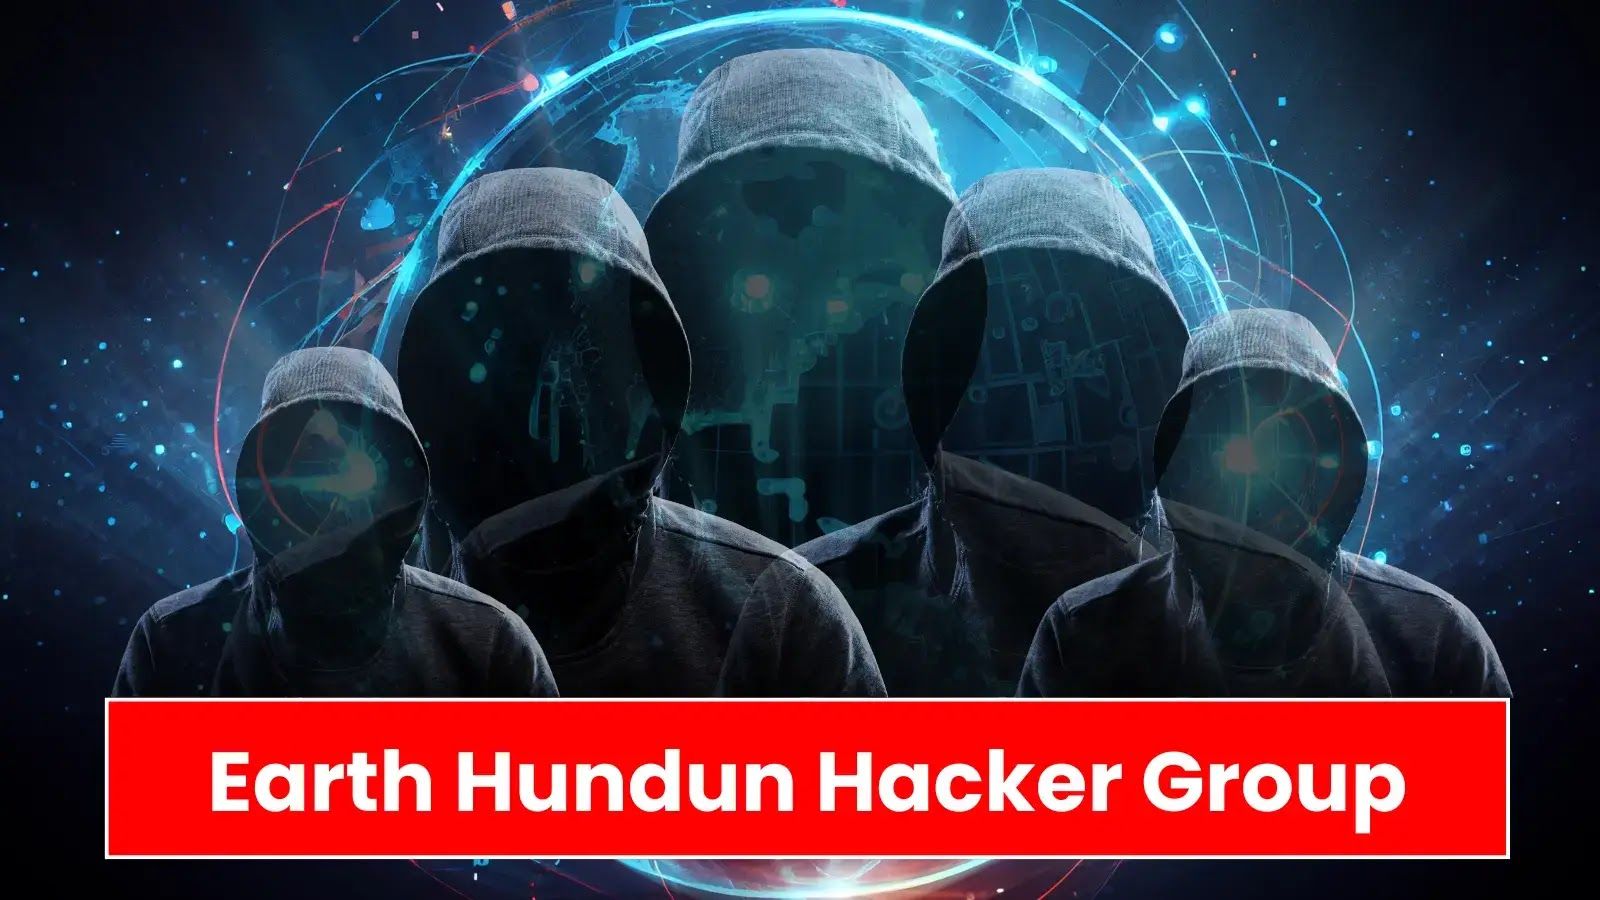  Earth Hundun Hacker Group Employs Advanced Tactics to Evade Detection